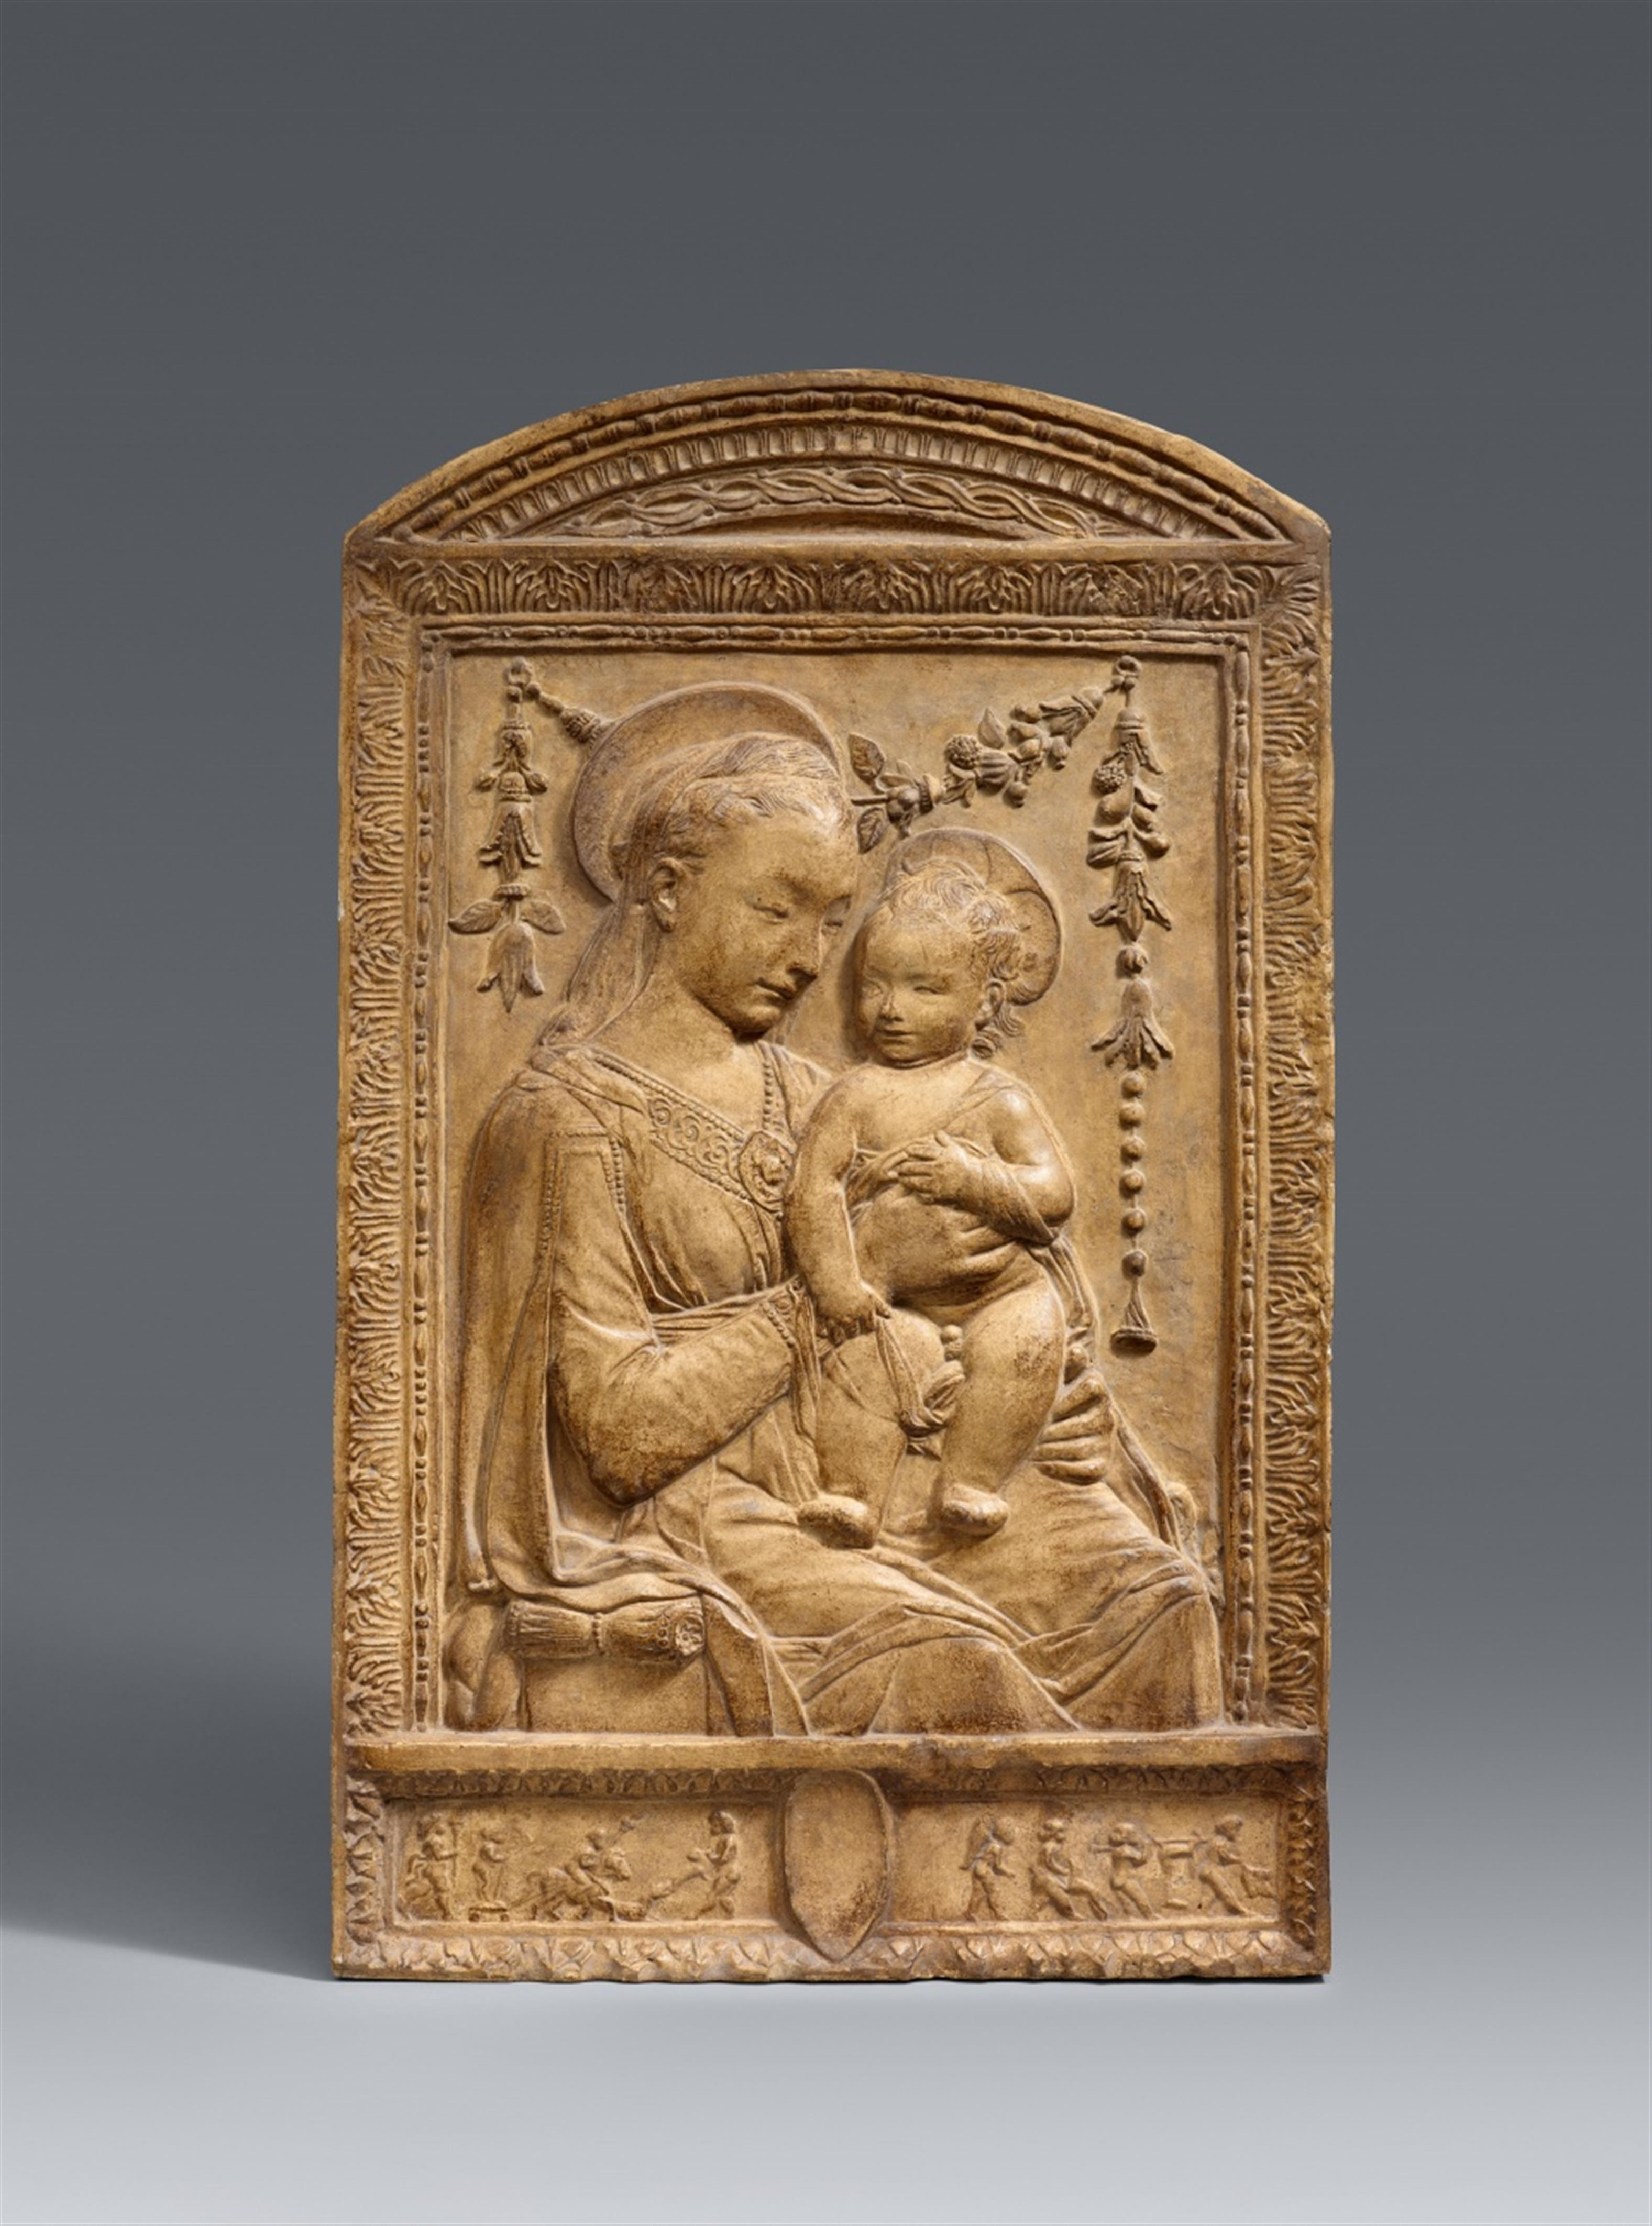 Antonio Rossellino, studio of - A plaster relief of the Virgin and Child from the workshop of Antonio Rossellino - image-1